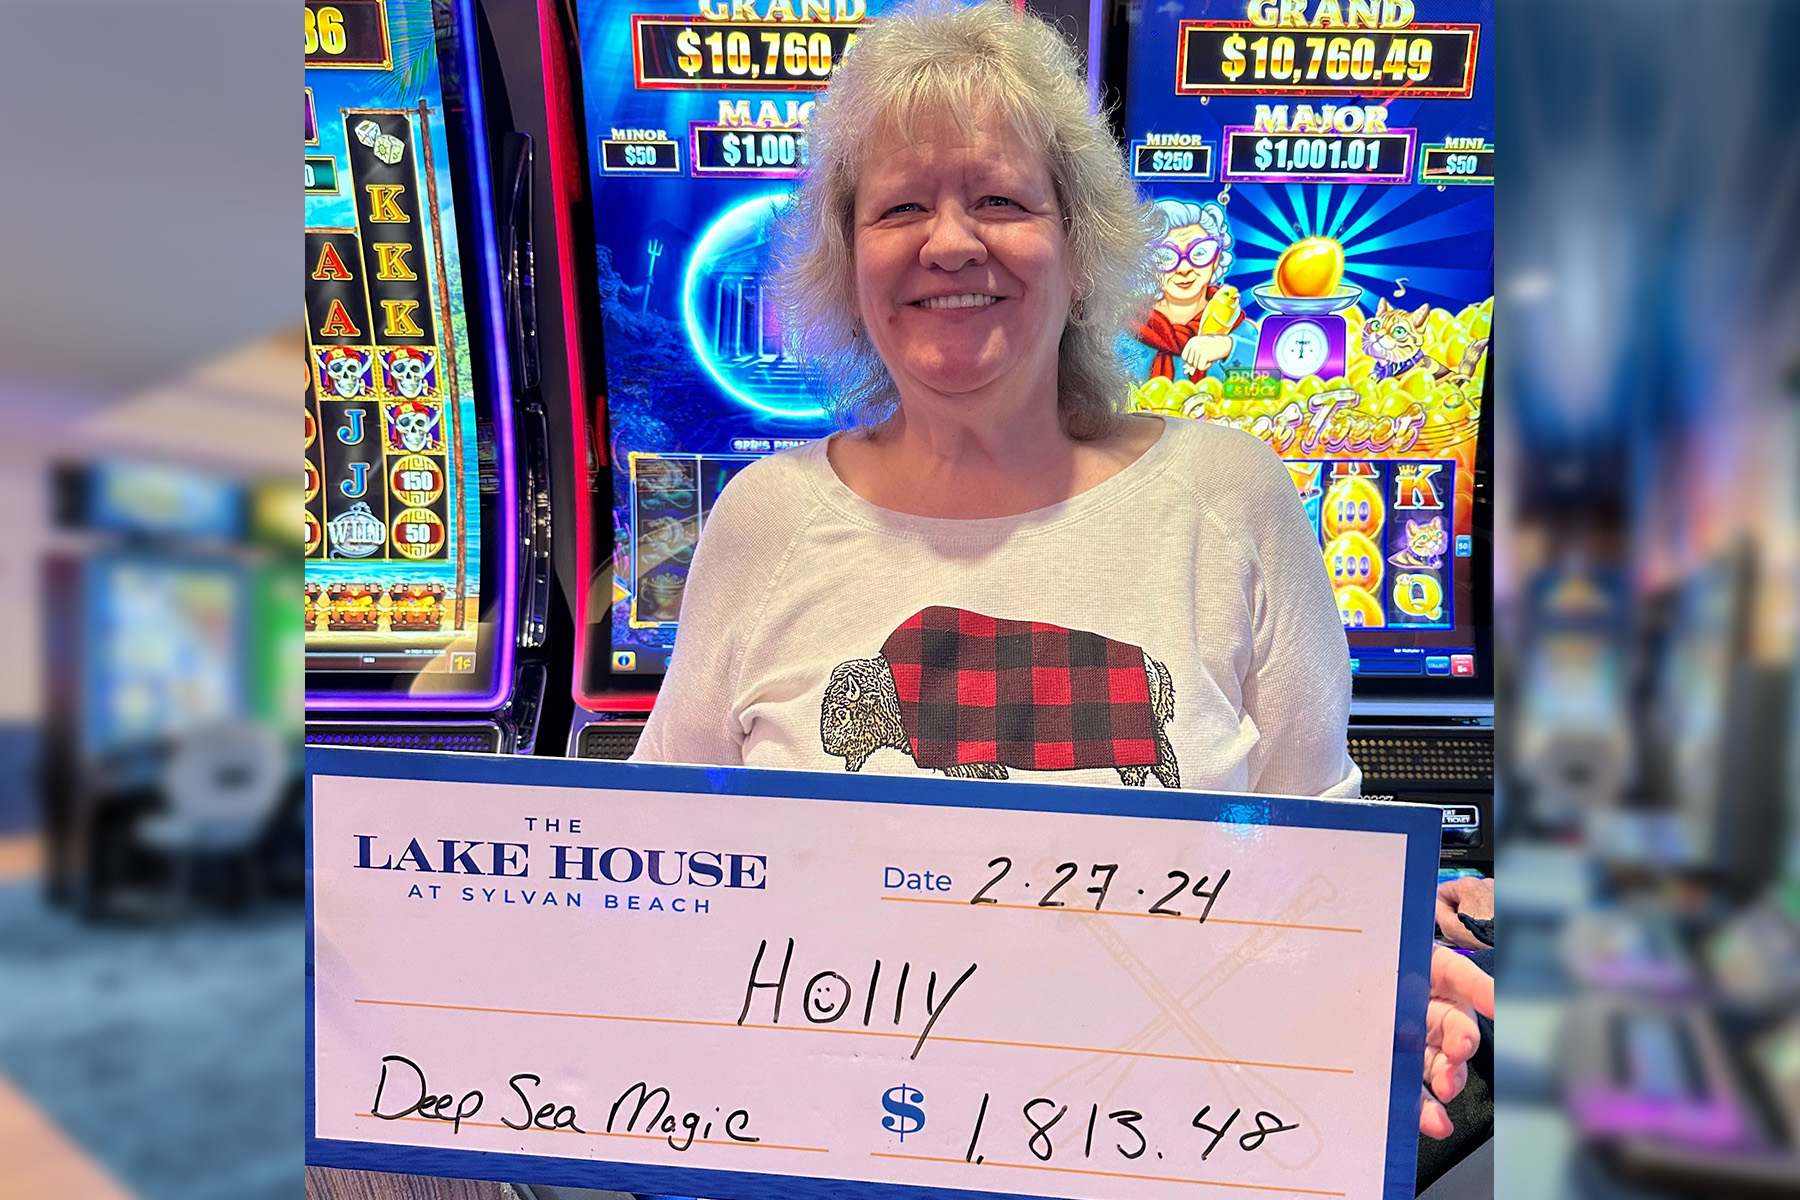 Holly won $1,813